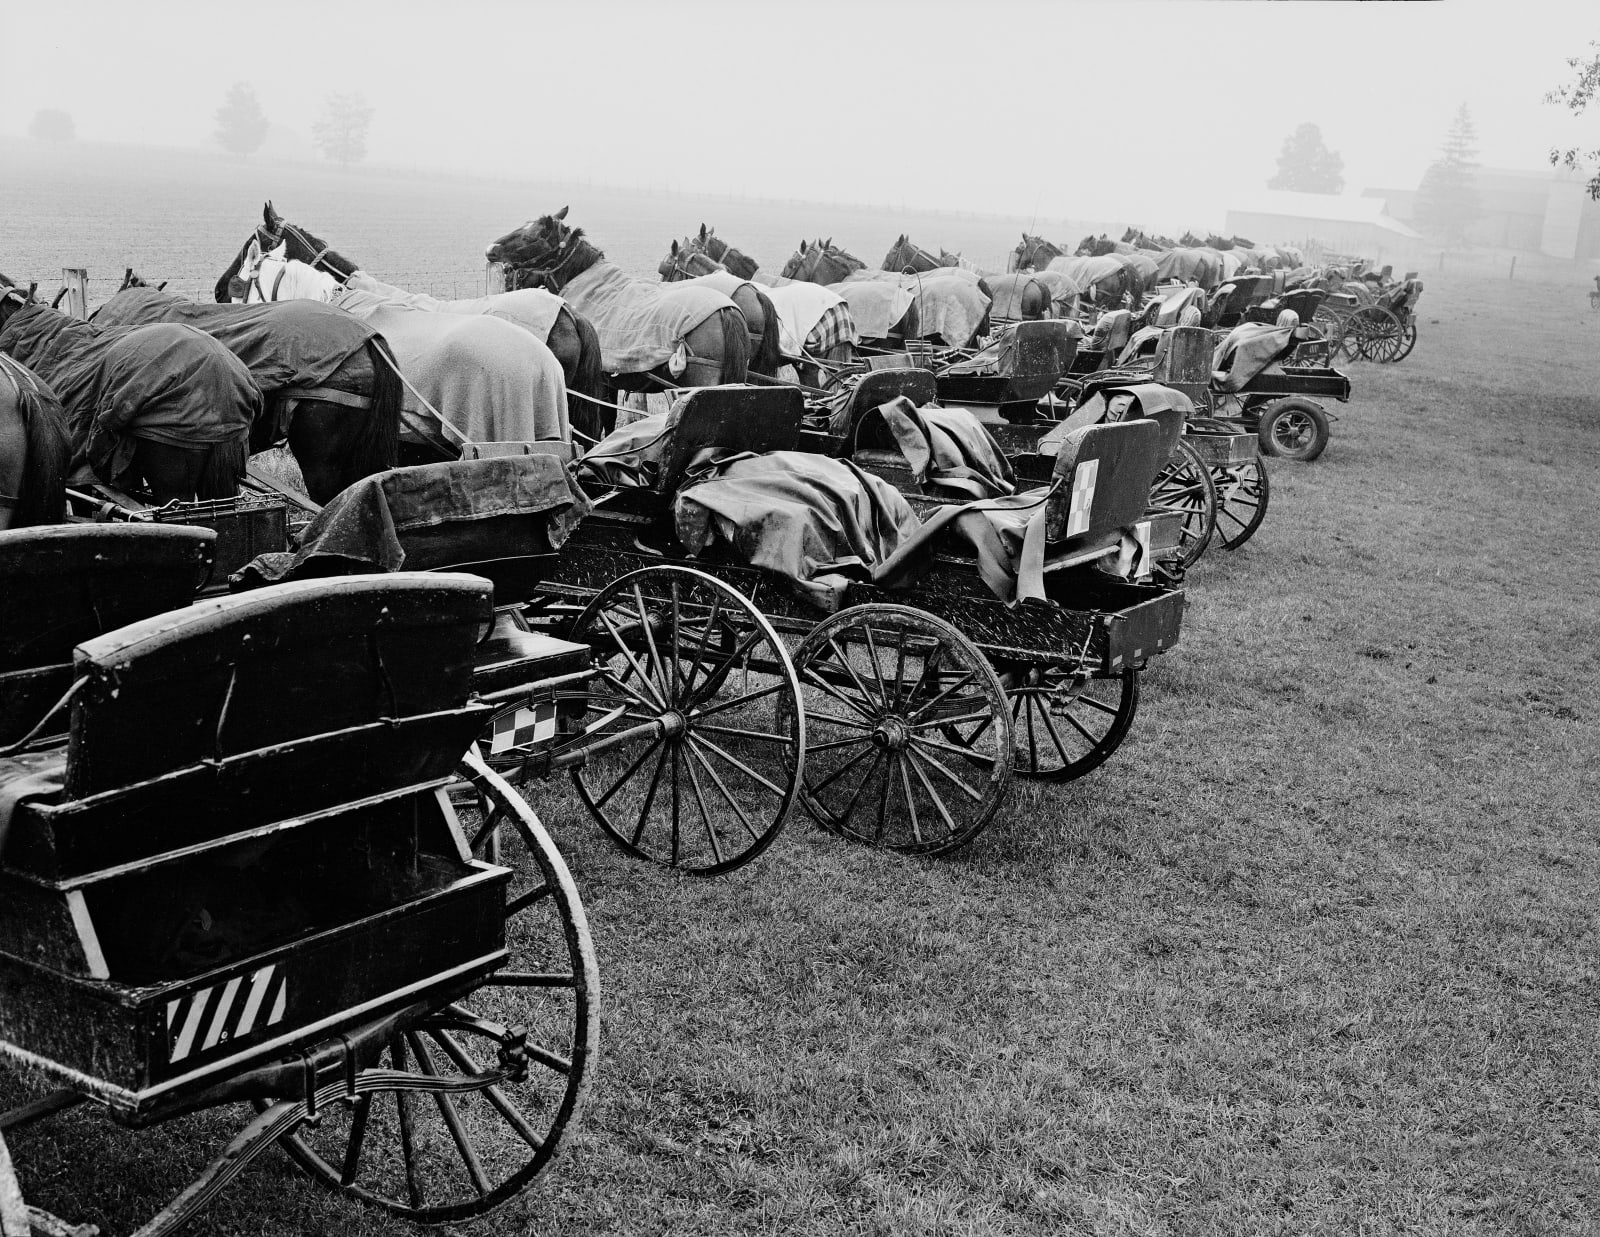 DAVID L. HUNSBERGER, Horse and Carriage, 1954